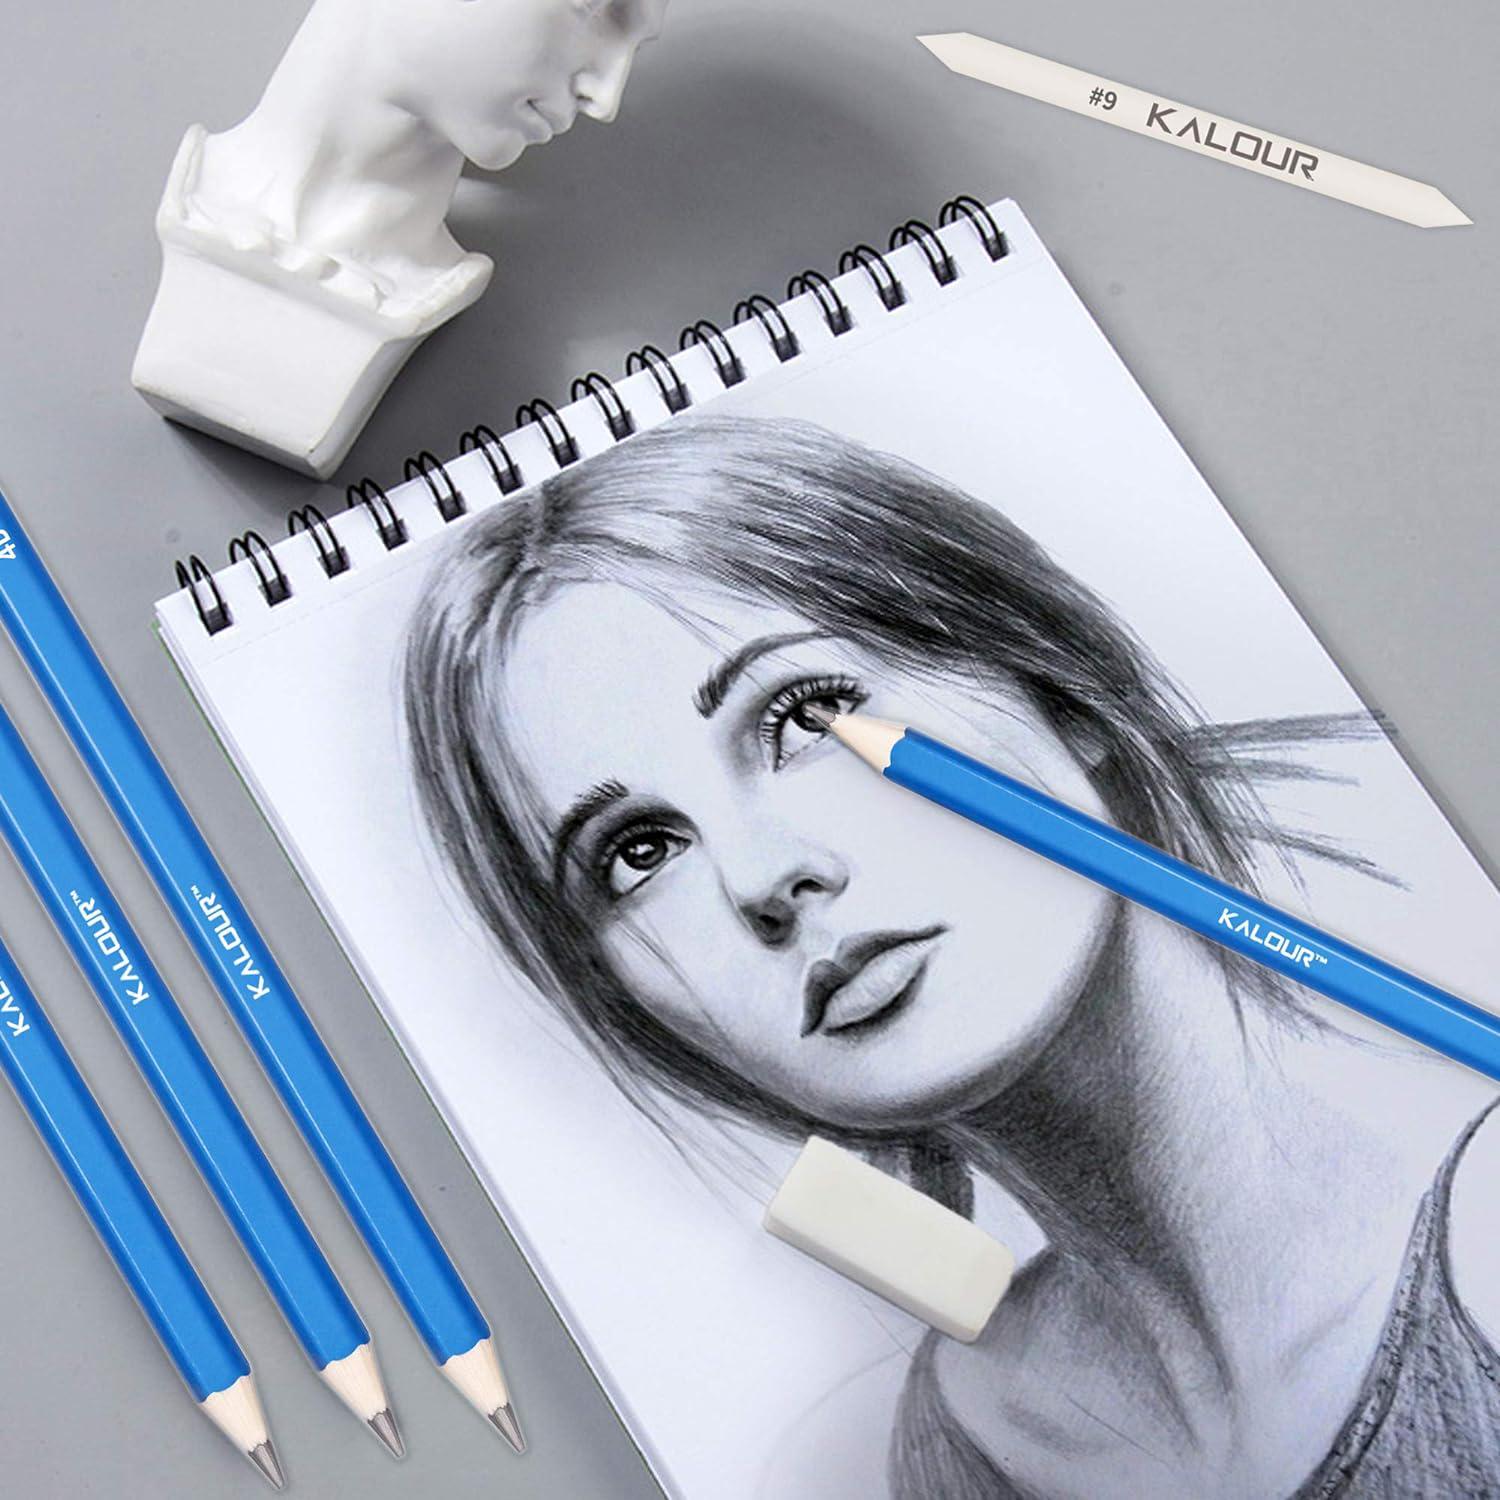 KALOUR Professional Colored Charcoal Pencils Drawing Set,12 Pieces Pastel Chalk Pencils for Sketching, Shading, Blending, Portrait, Black White